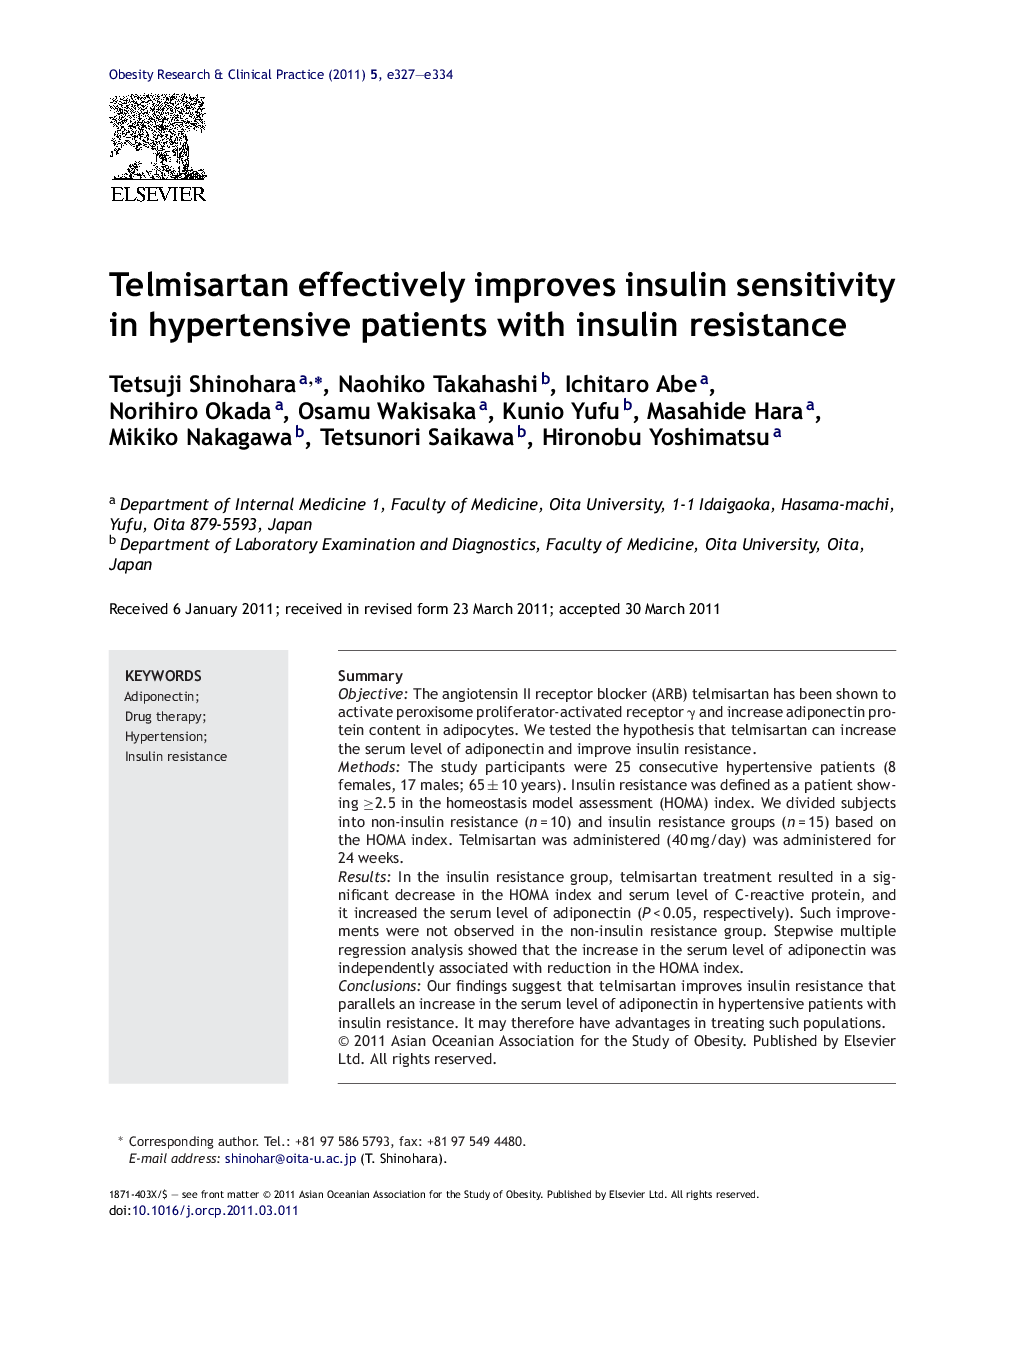 Telmisartan effectively improves insulin sensitivity in hypertensive patients with insulin resistance